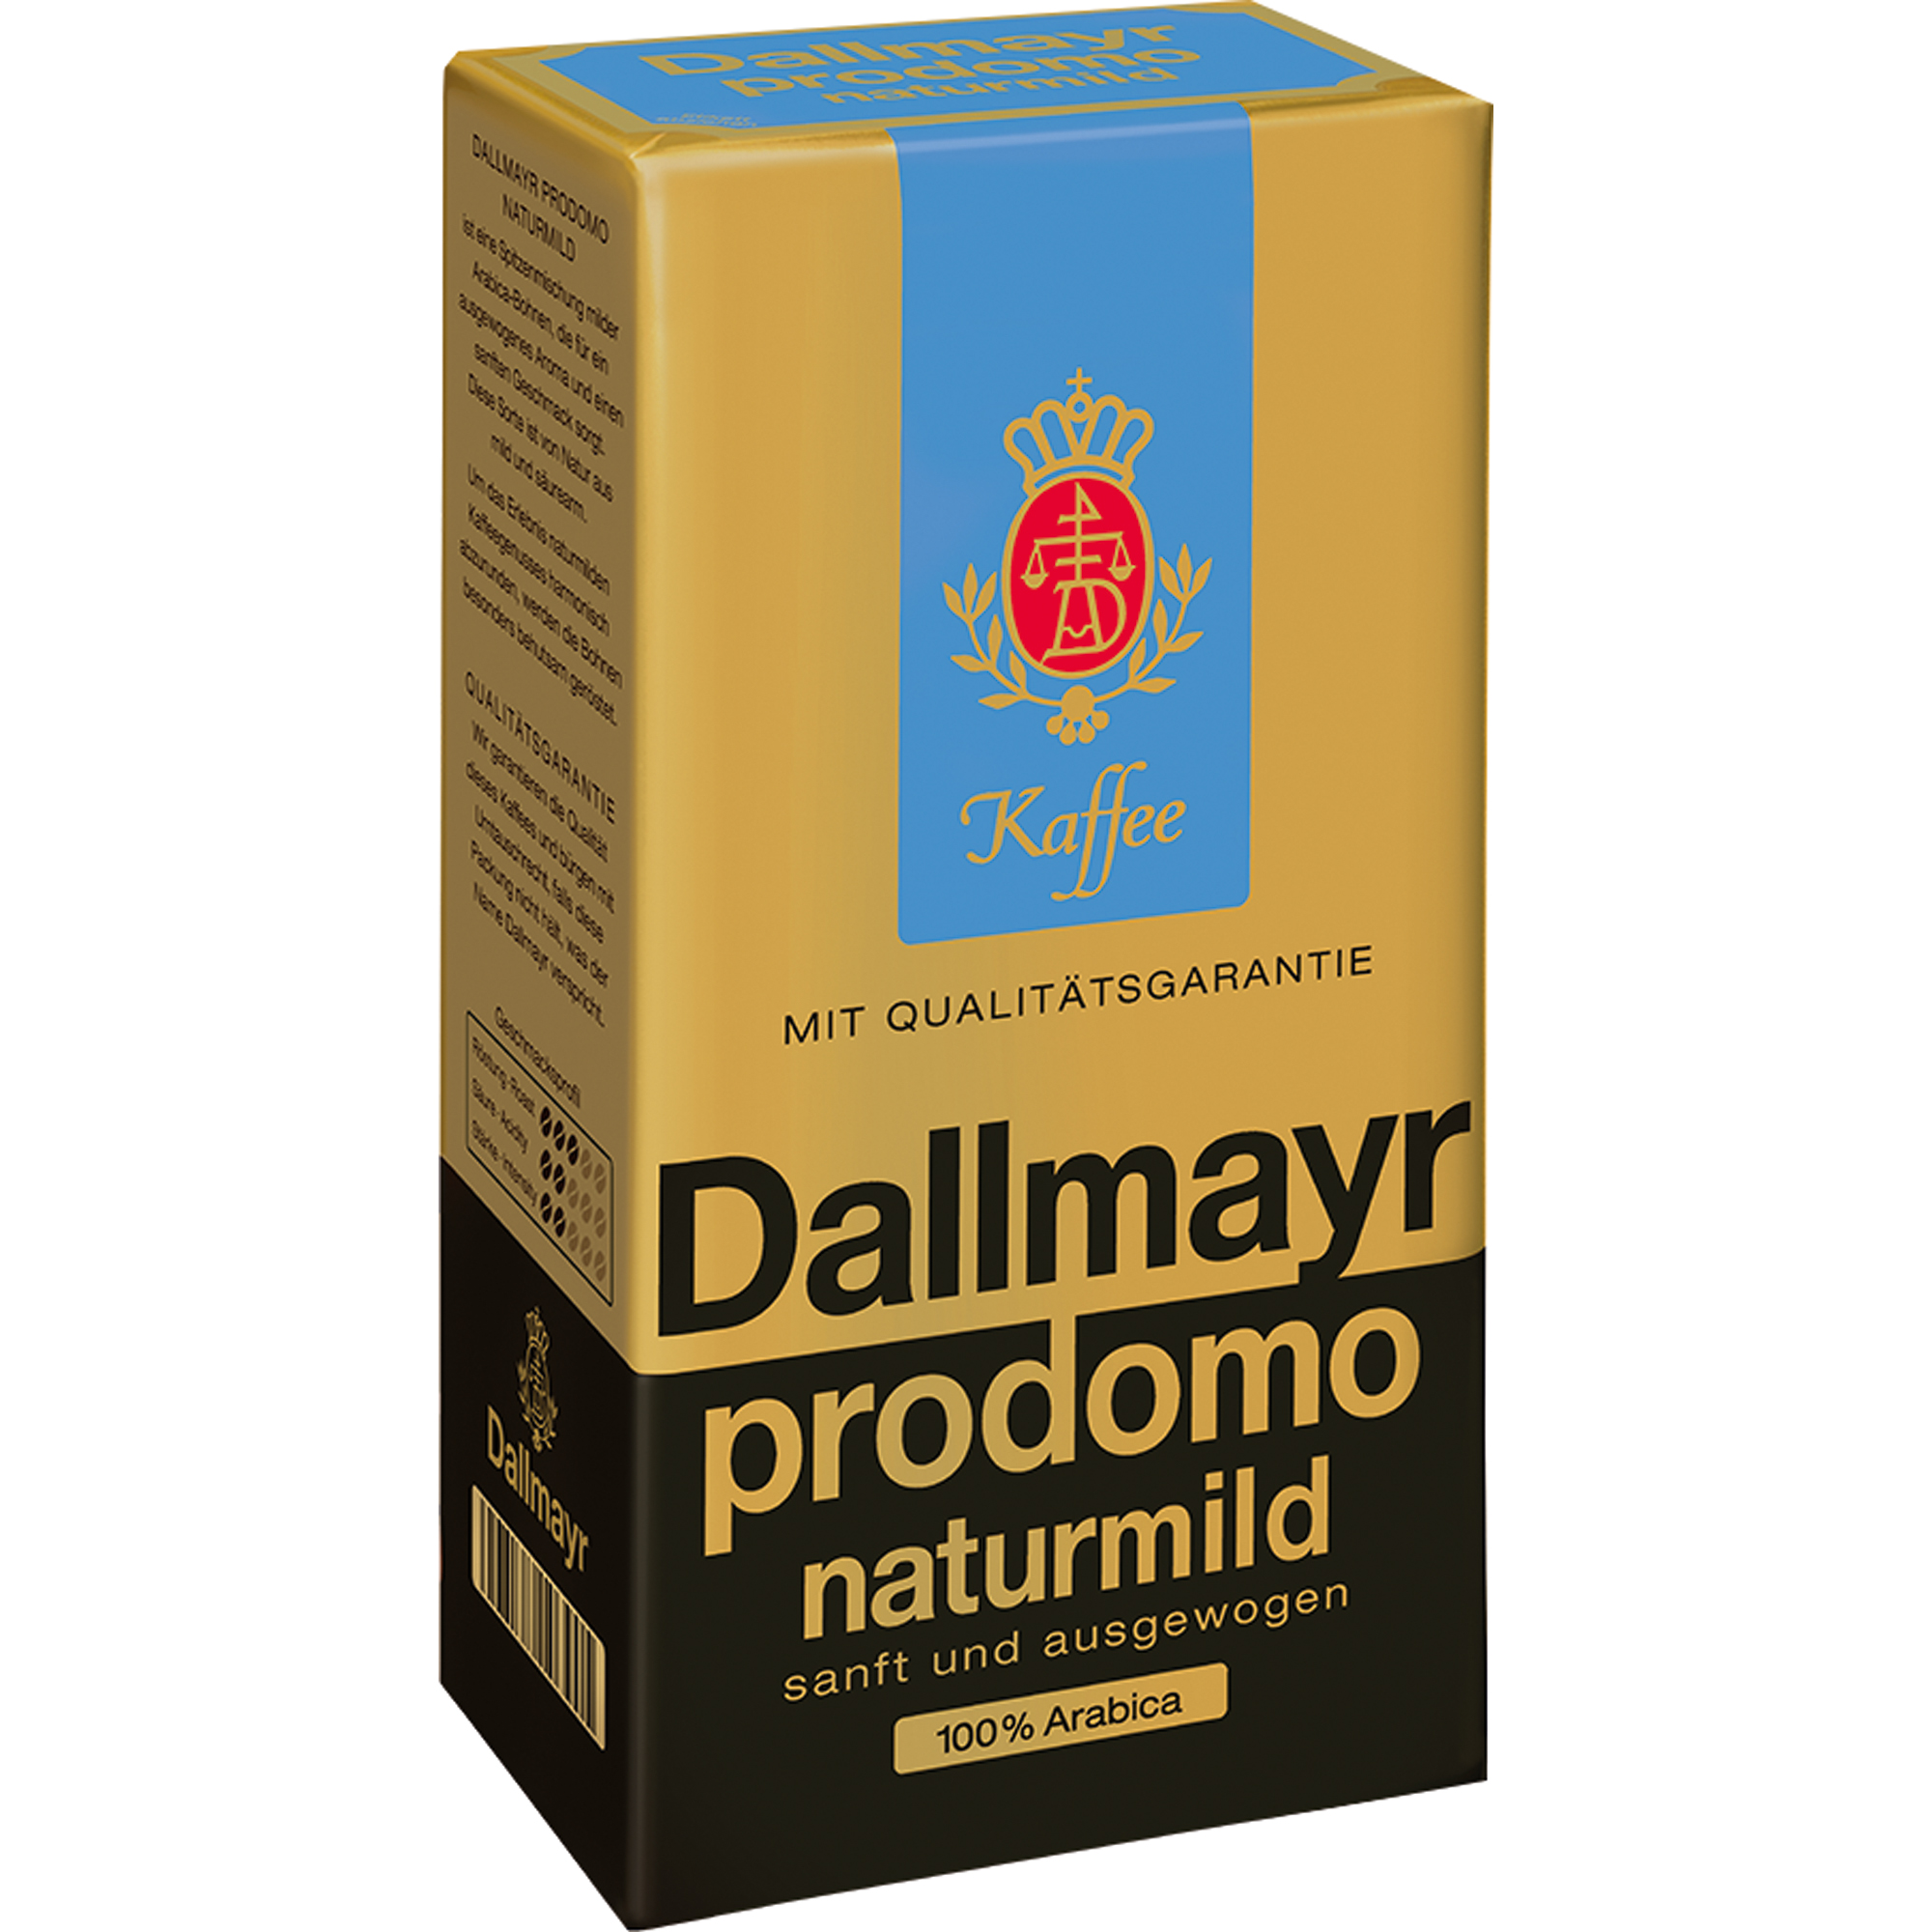 Dallmayr Kaffee prodomo gemahlen naturmild, Arabica